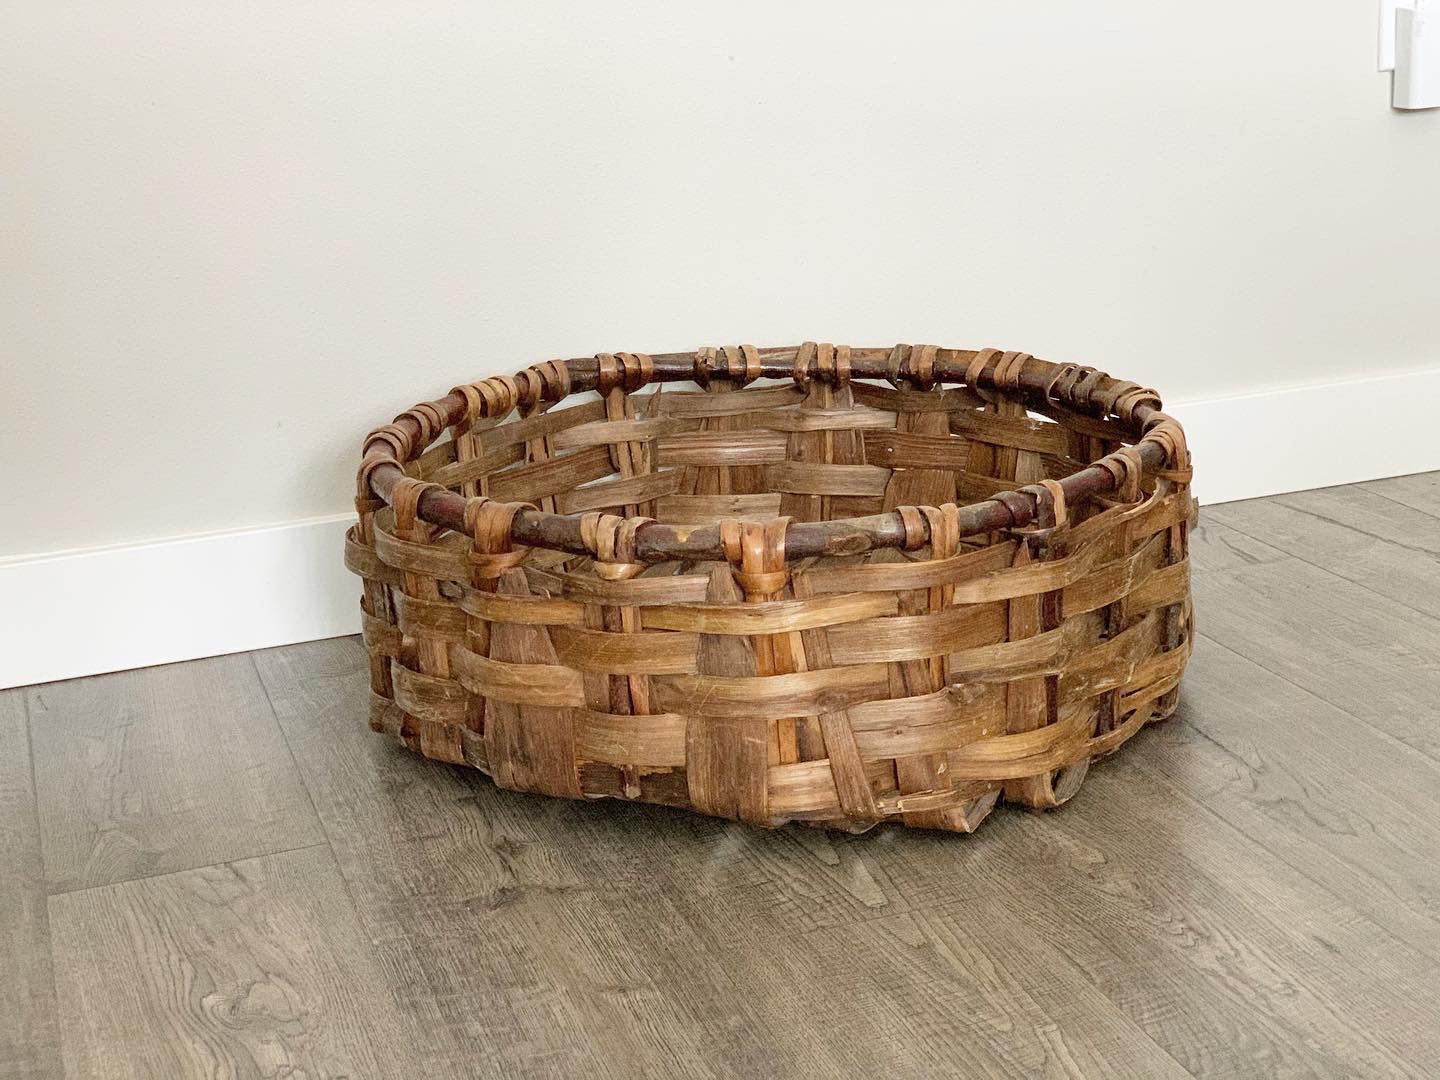 Medium sized round basket